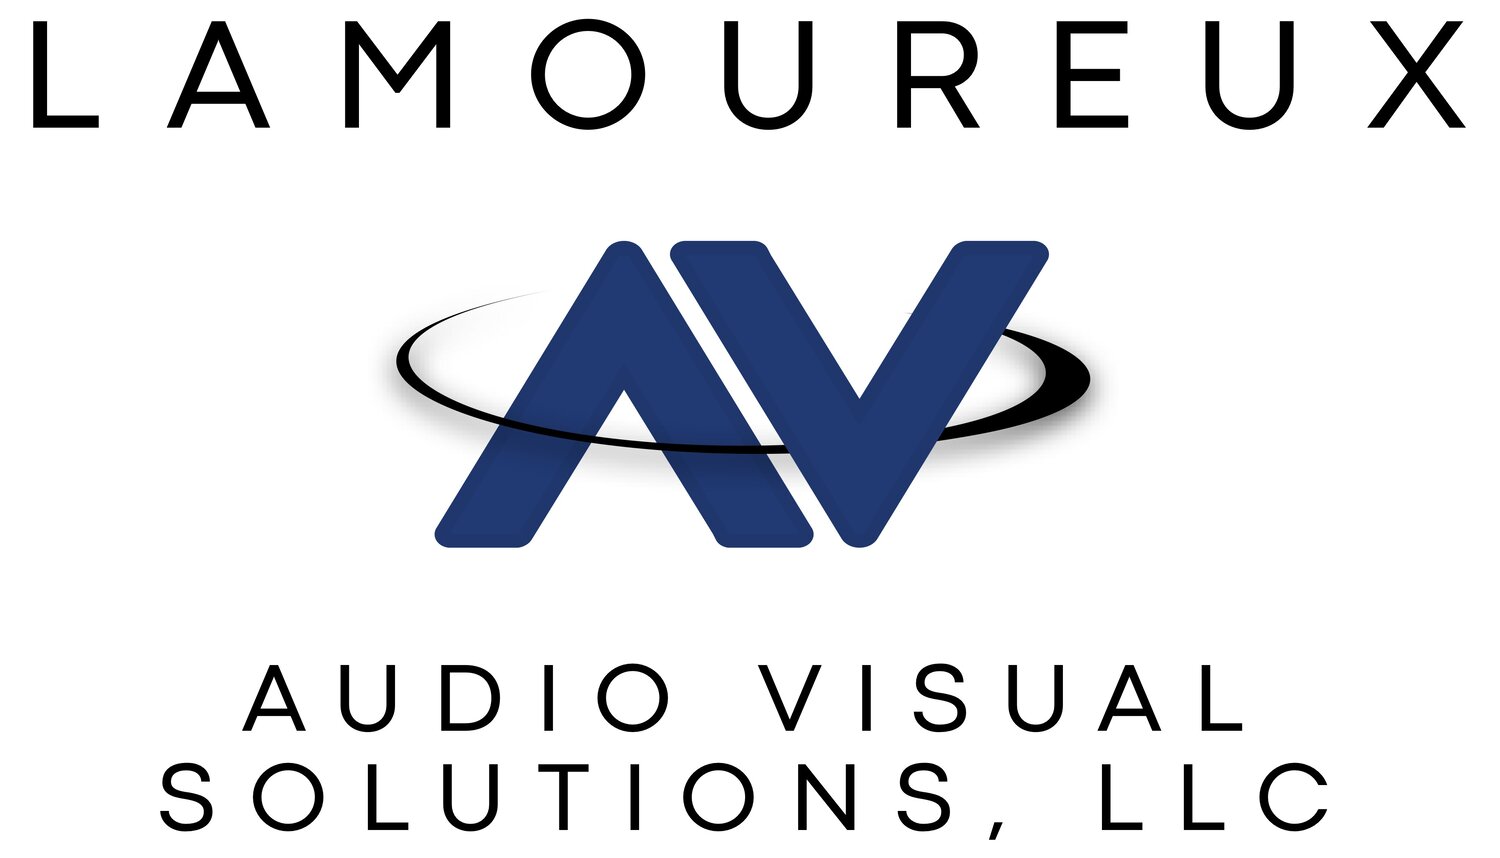 Lamoureux Audio Visual Solutions, LLC